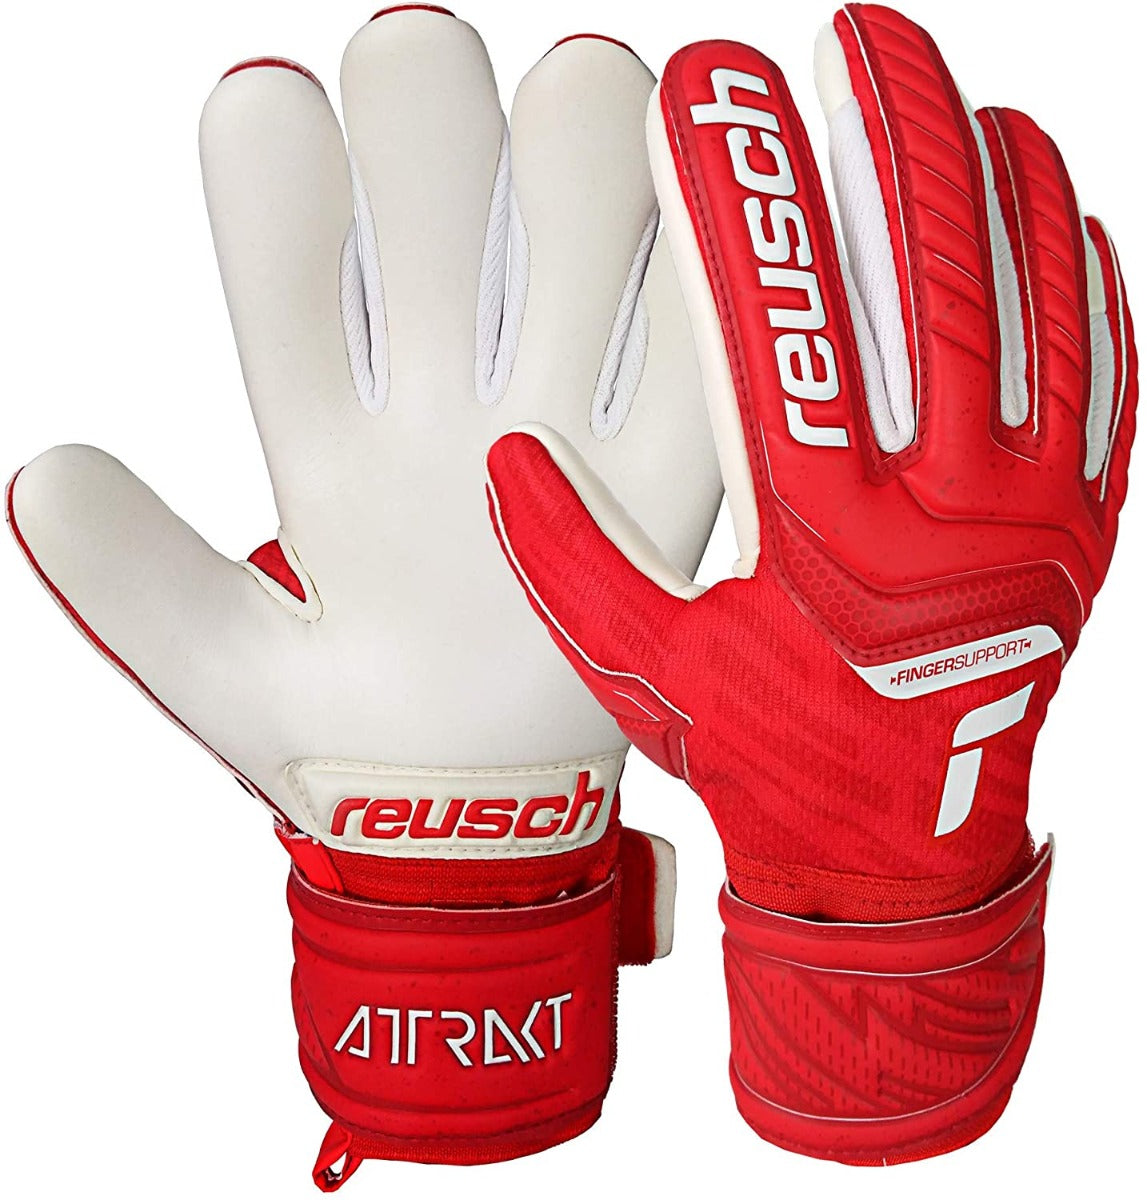 Reusch JR Attrakt Grip Evolution Finger Support Goalkeeper Gloves - Red-White (Pair)